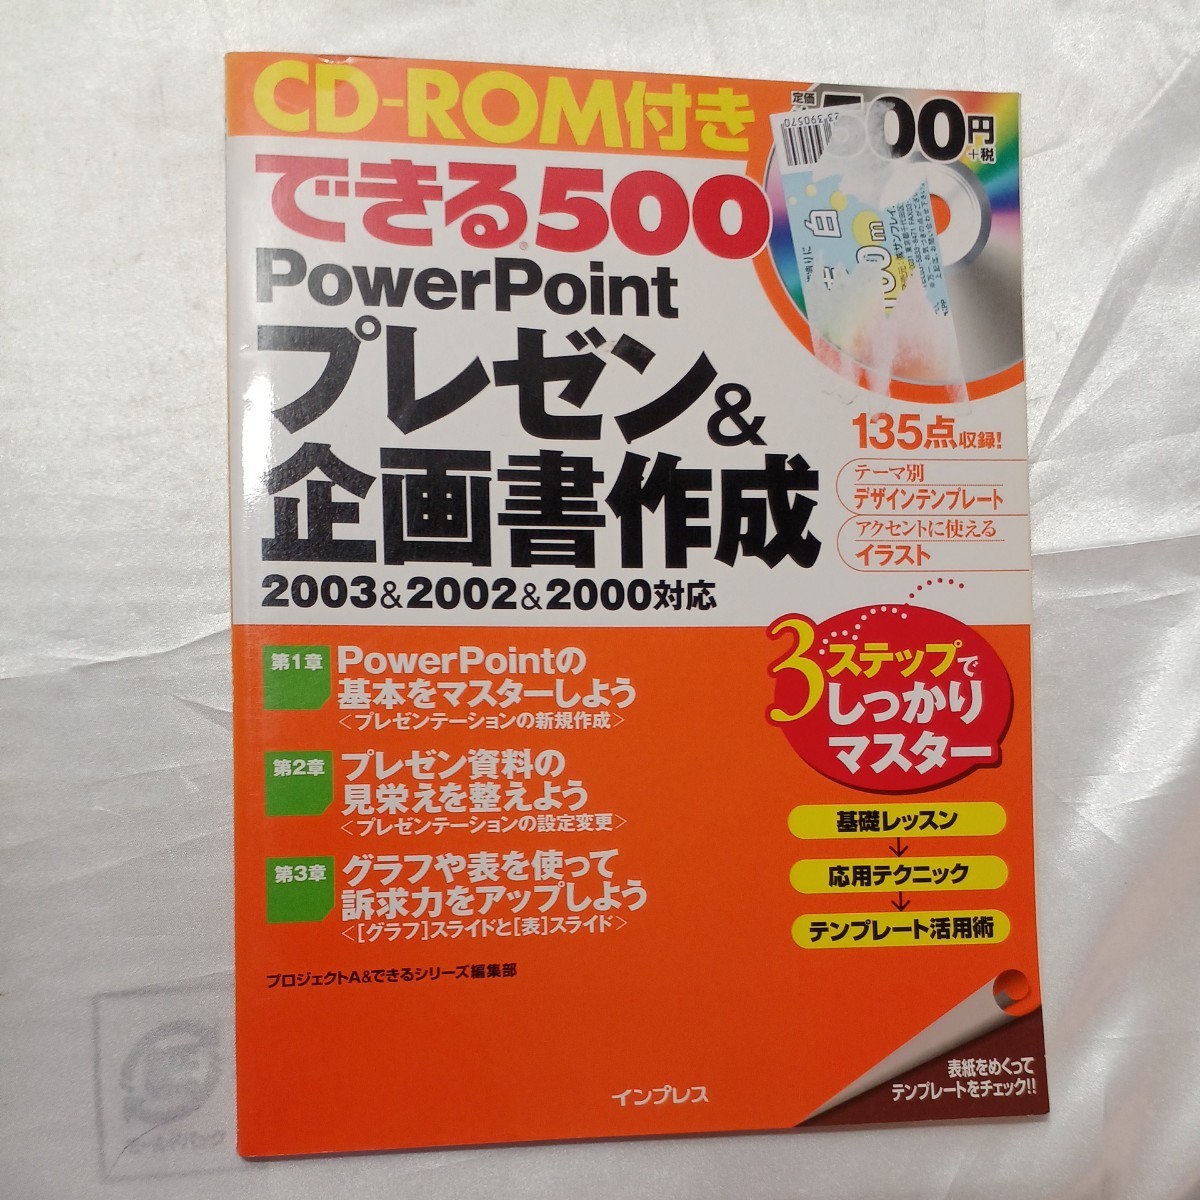 zaa-463! is possible 500 PowerPoint pre zen& plan paper making CD-ROM attaching 2004/6/21